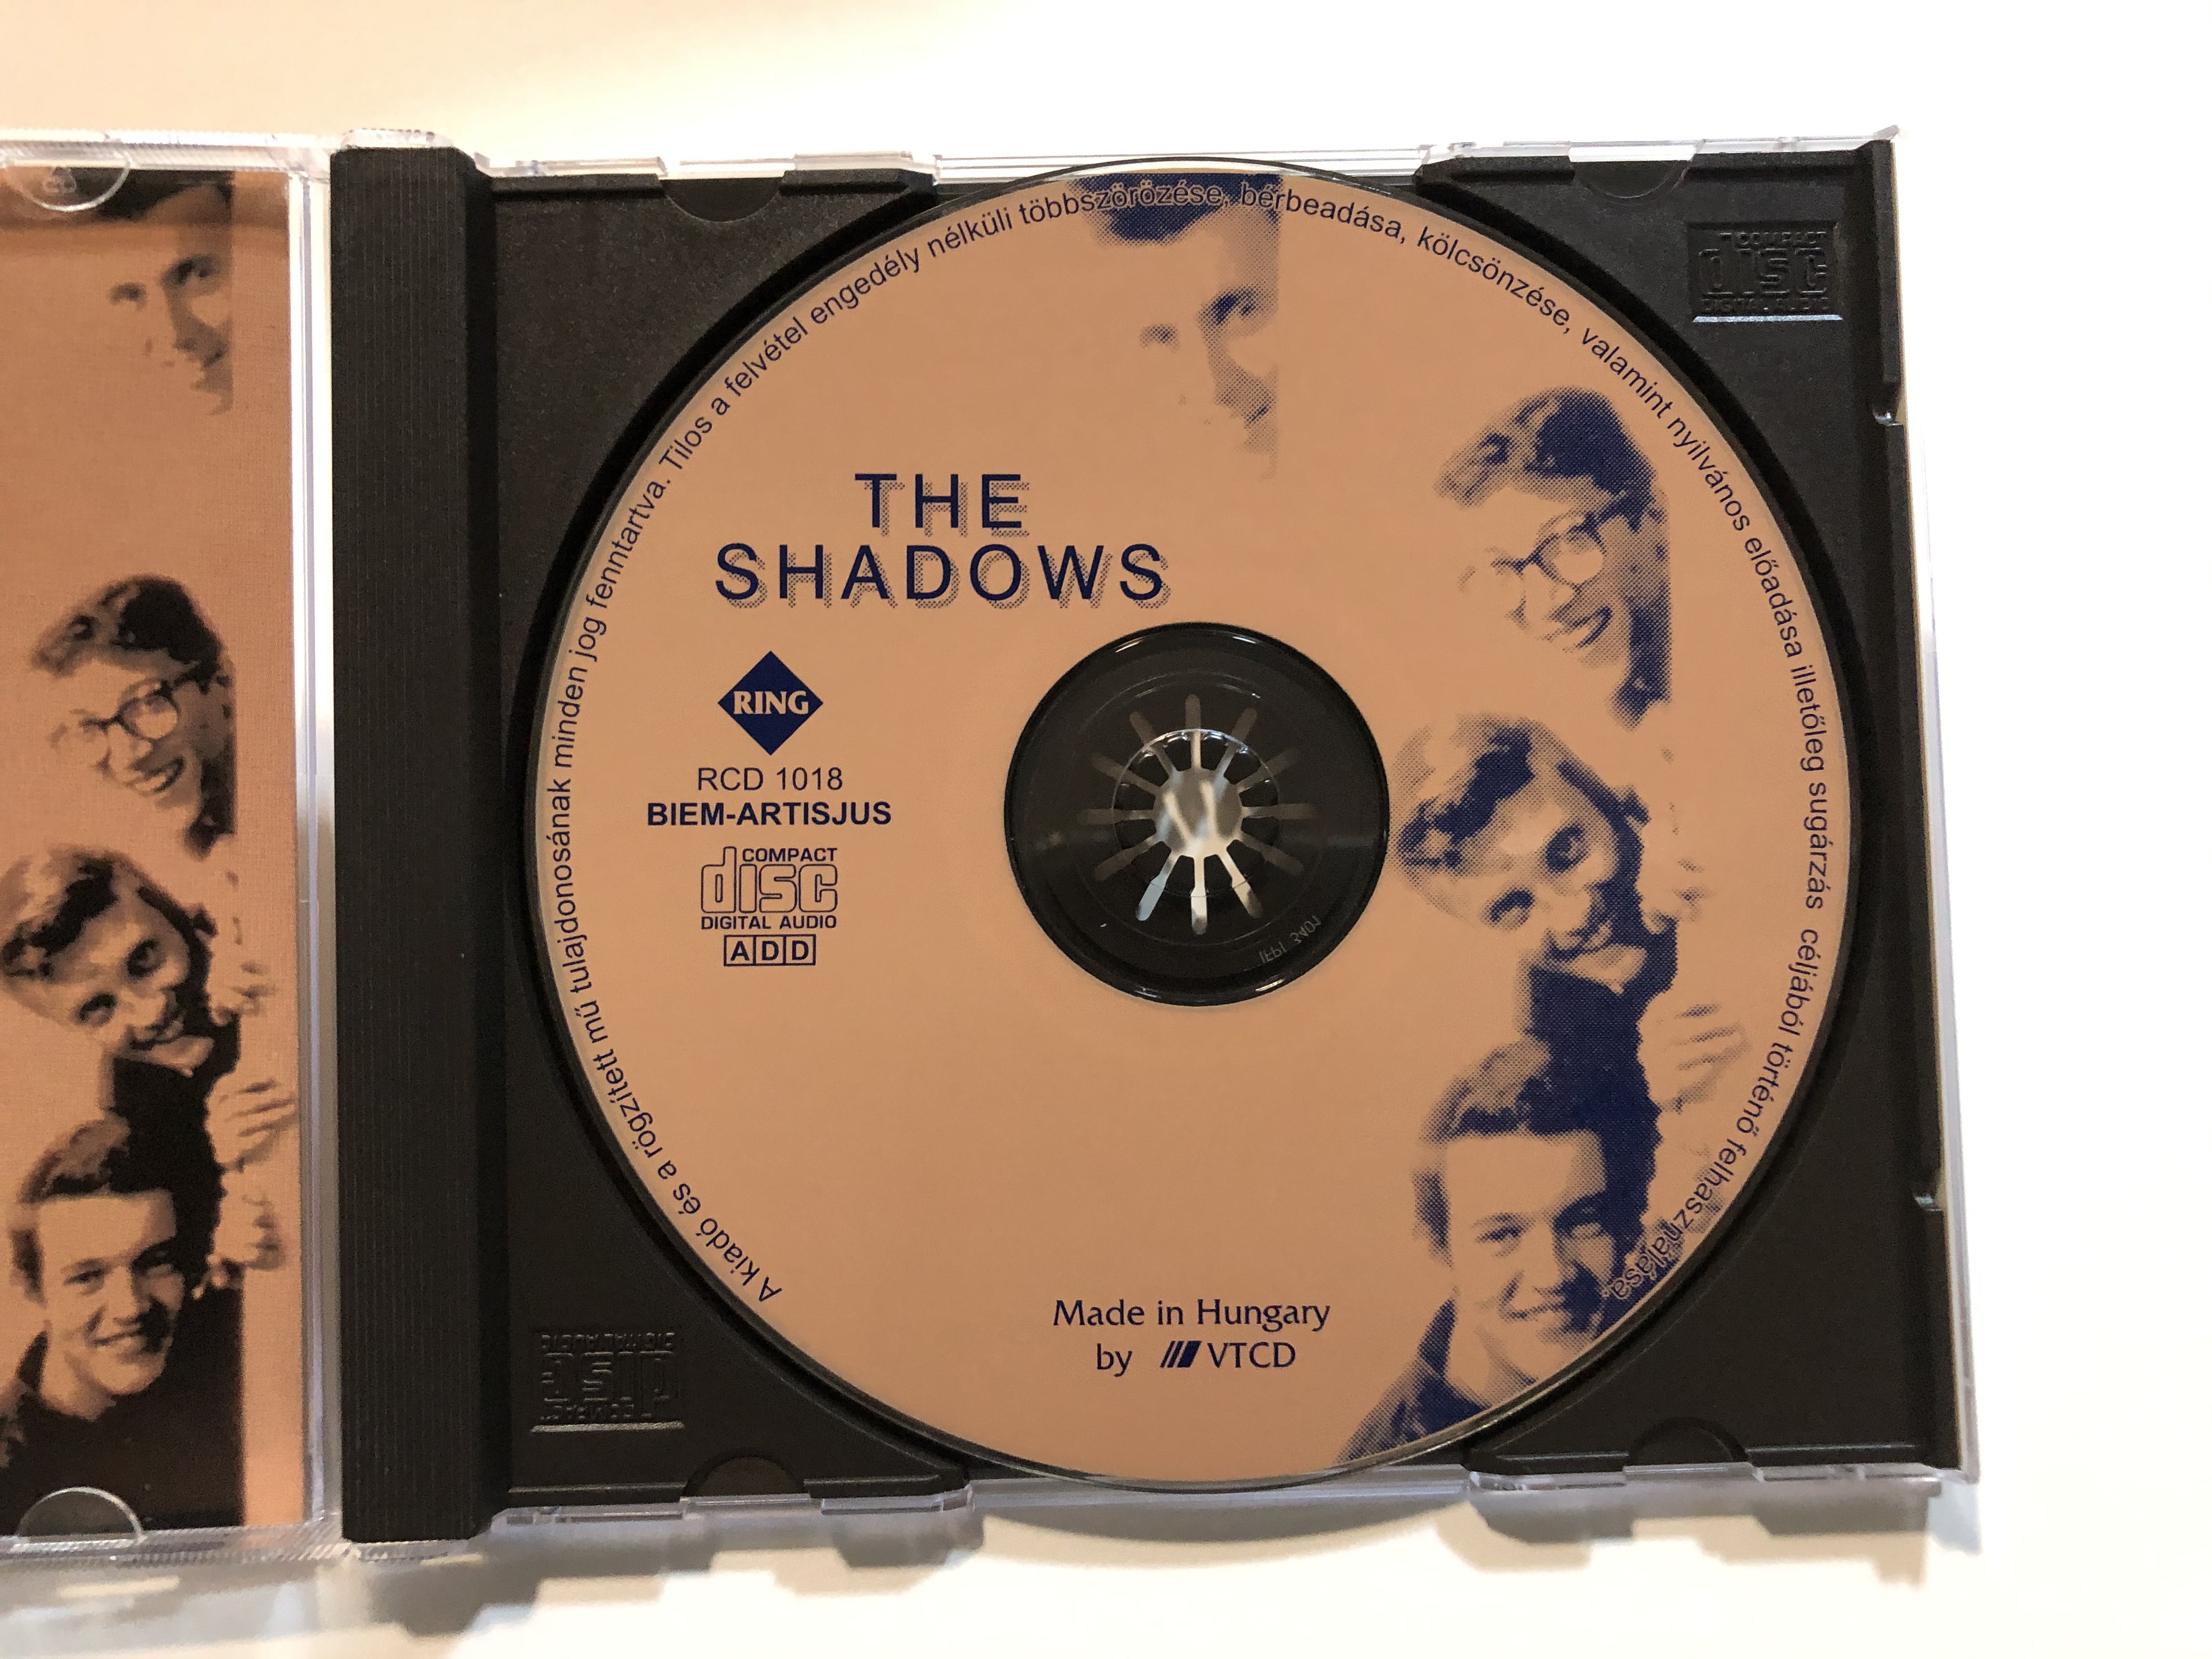 The Shadows / Greatest Hits / Ring Audio CD / RCD 1018 - bibleinmylanguage